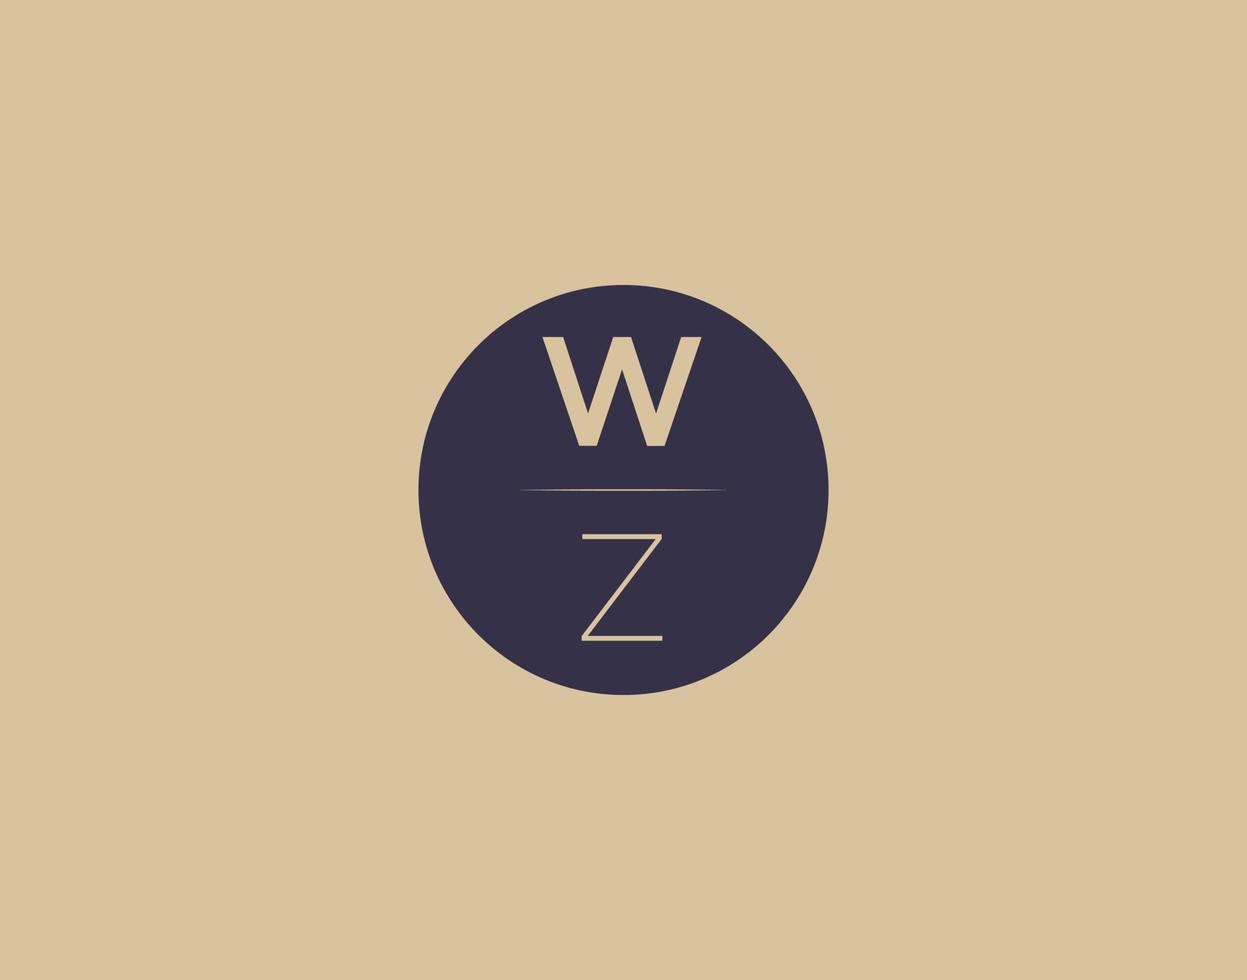 WZ letter modern elegant logo design vector images